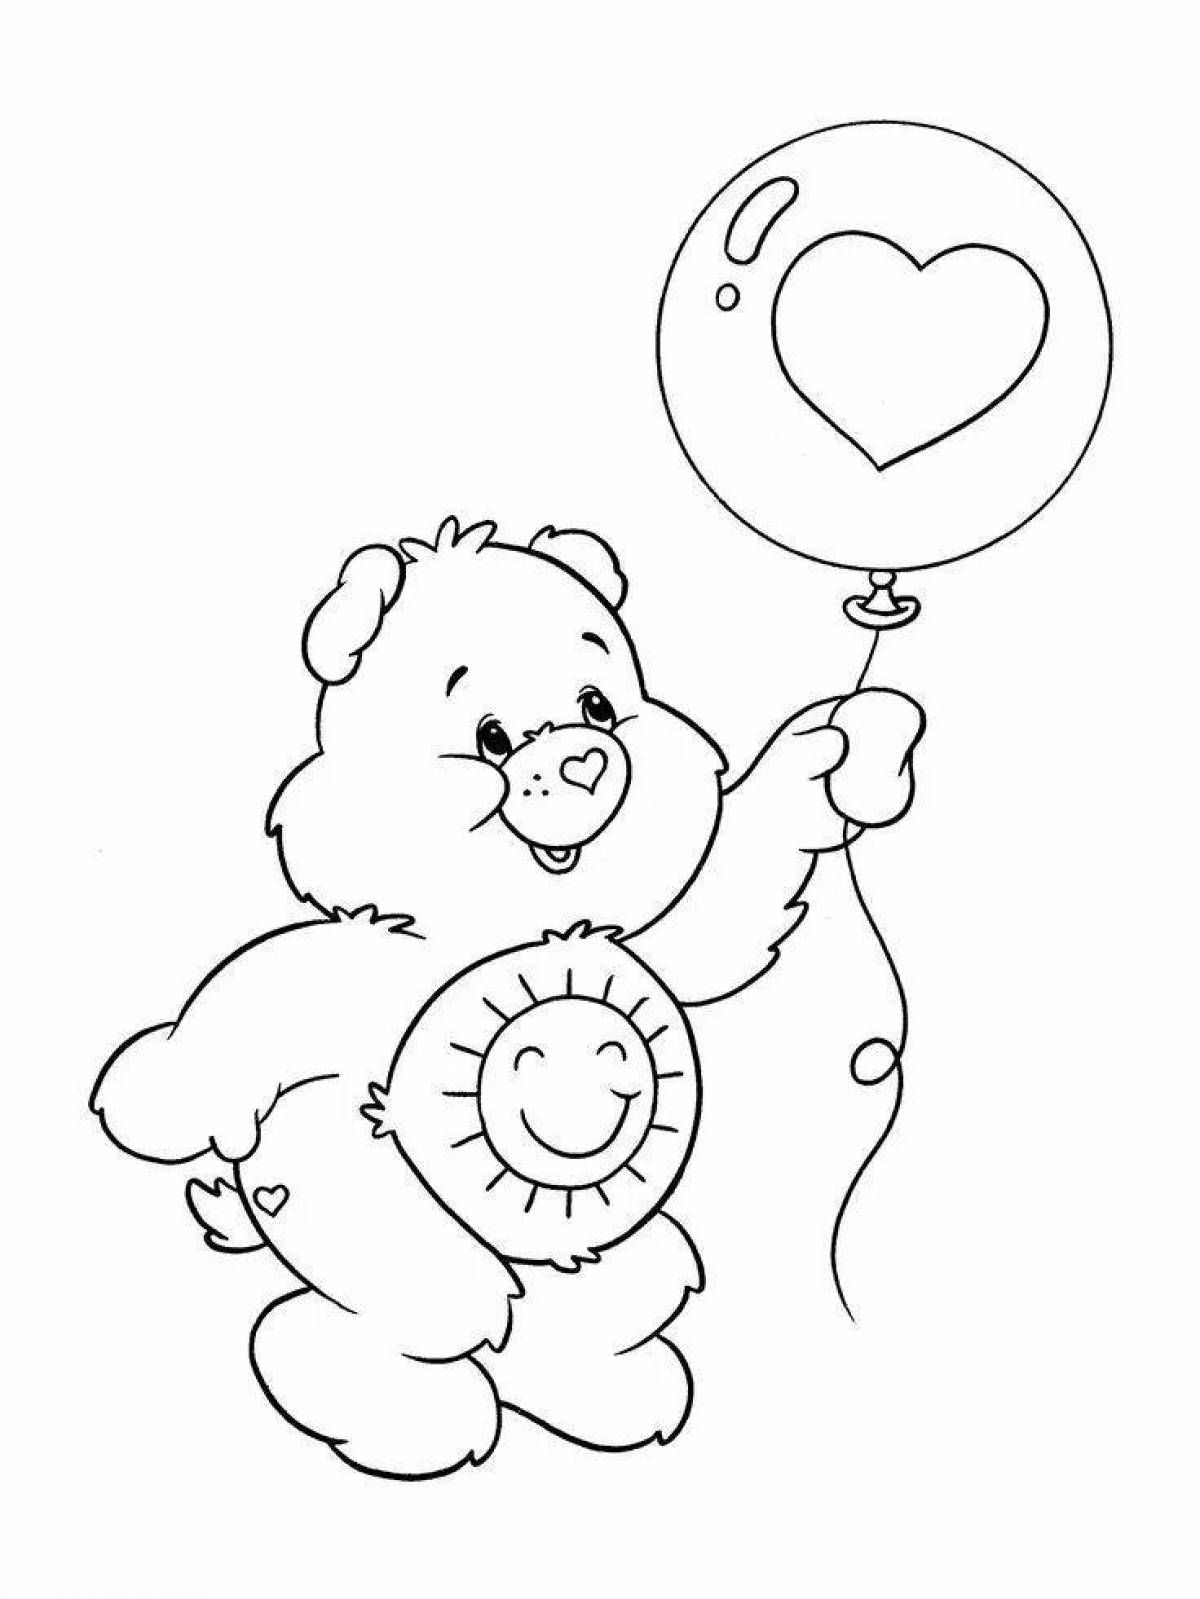 Jolly bear with balloons